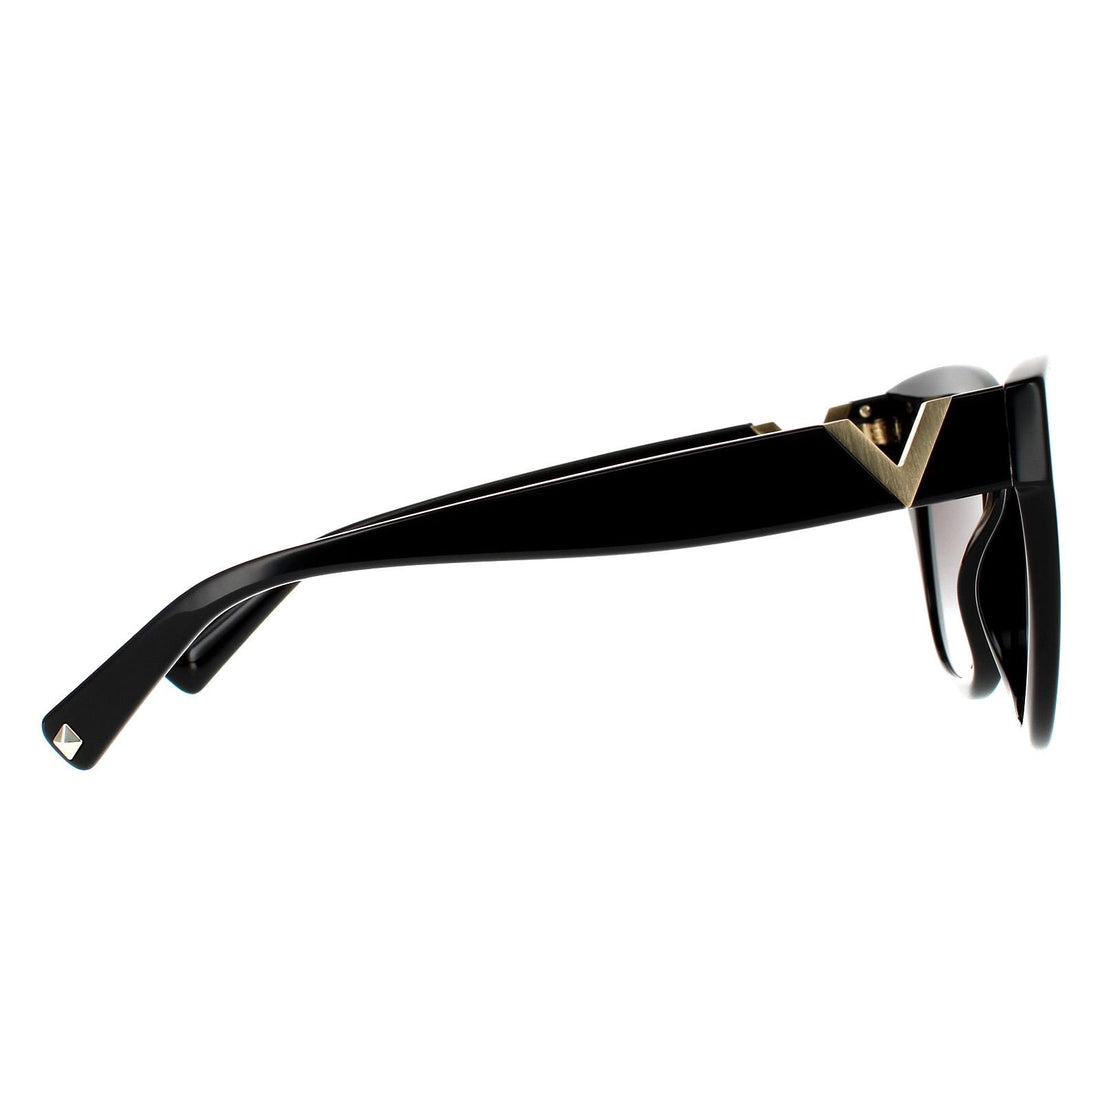 Valentino Sunglasses VA4089 50018G Black Black Gradient